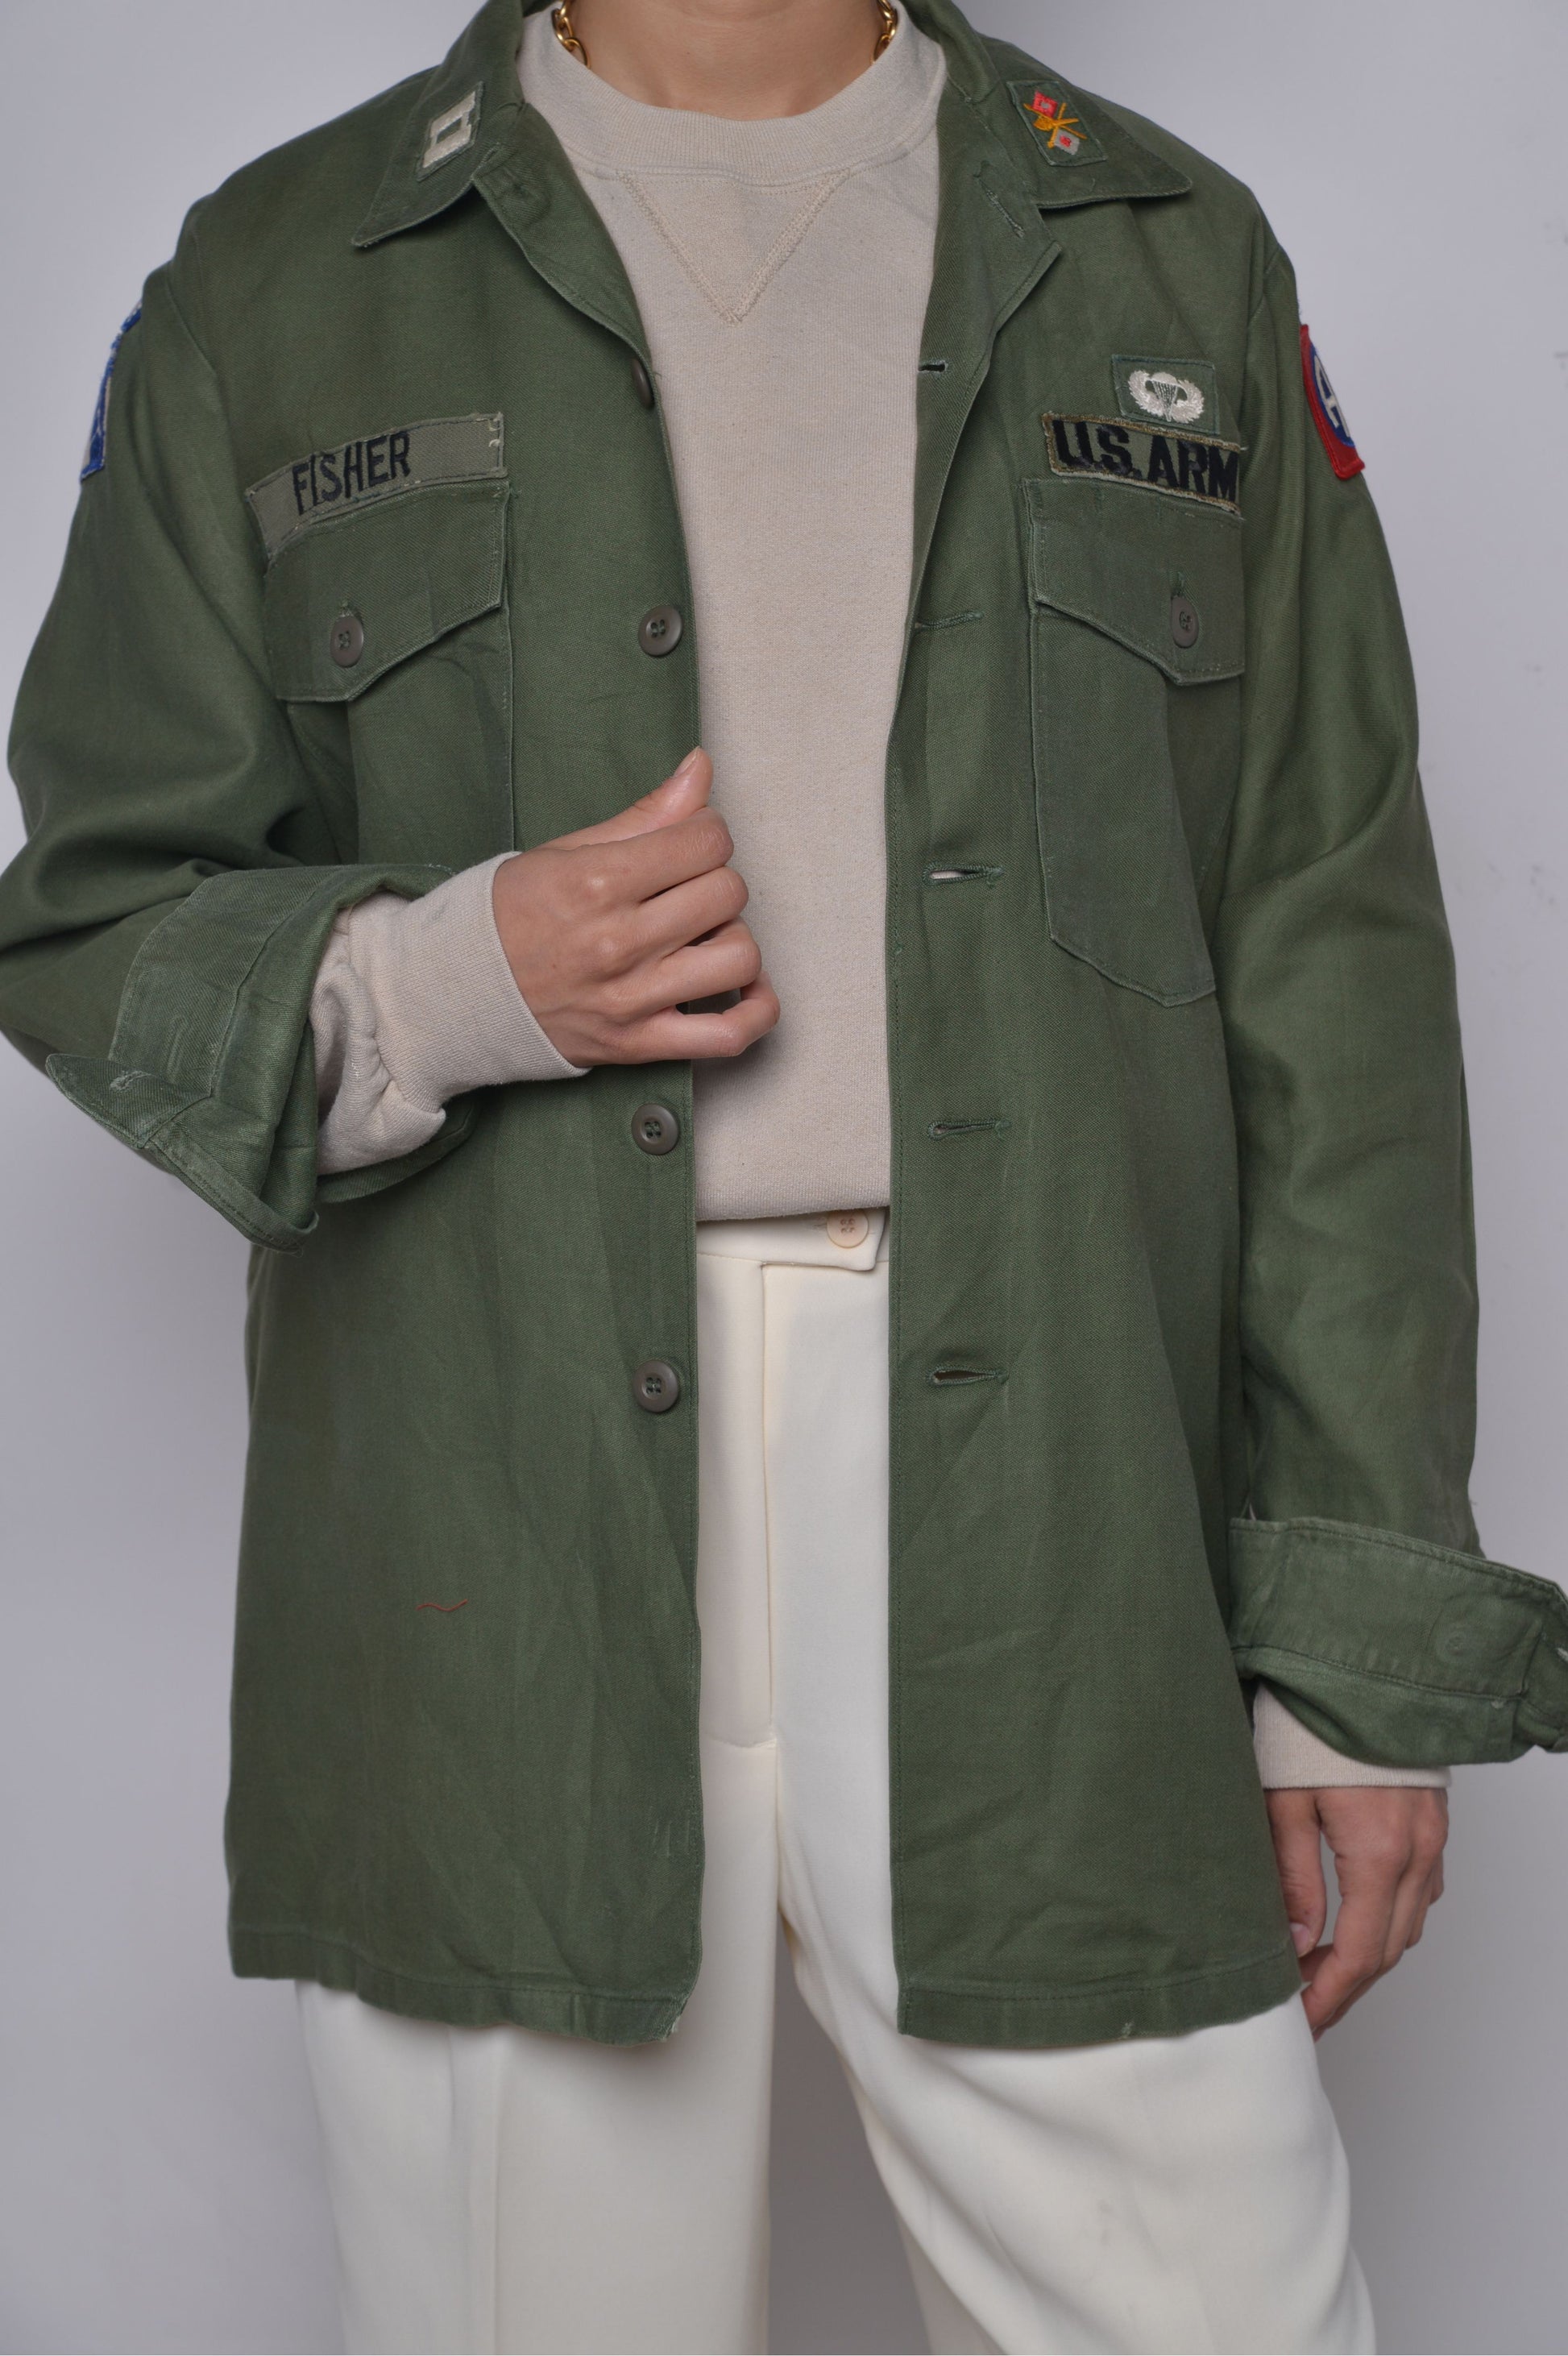 Military Jacket